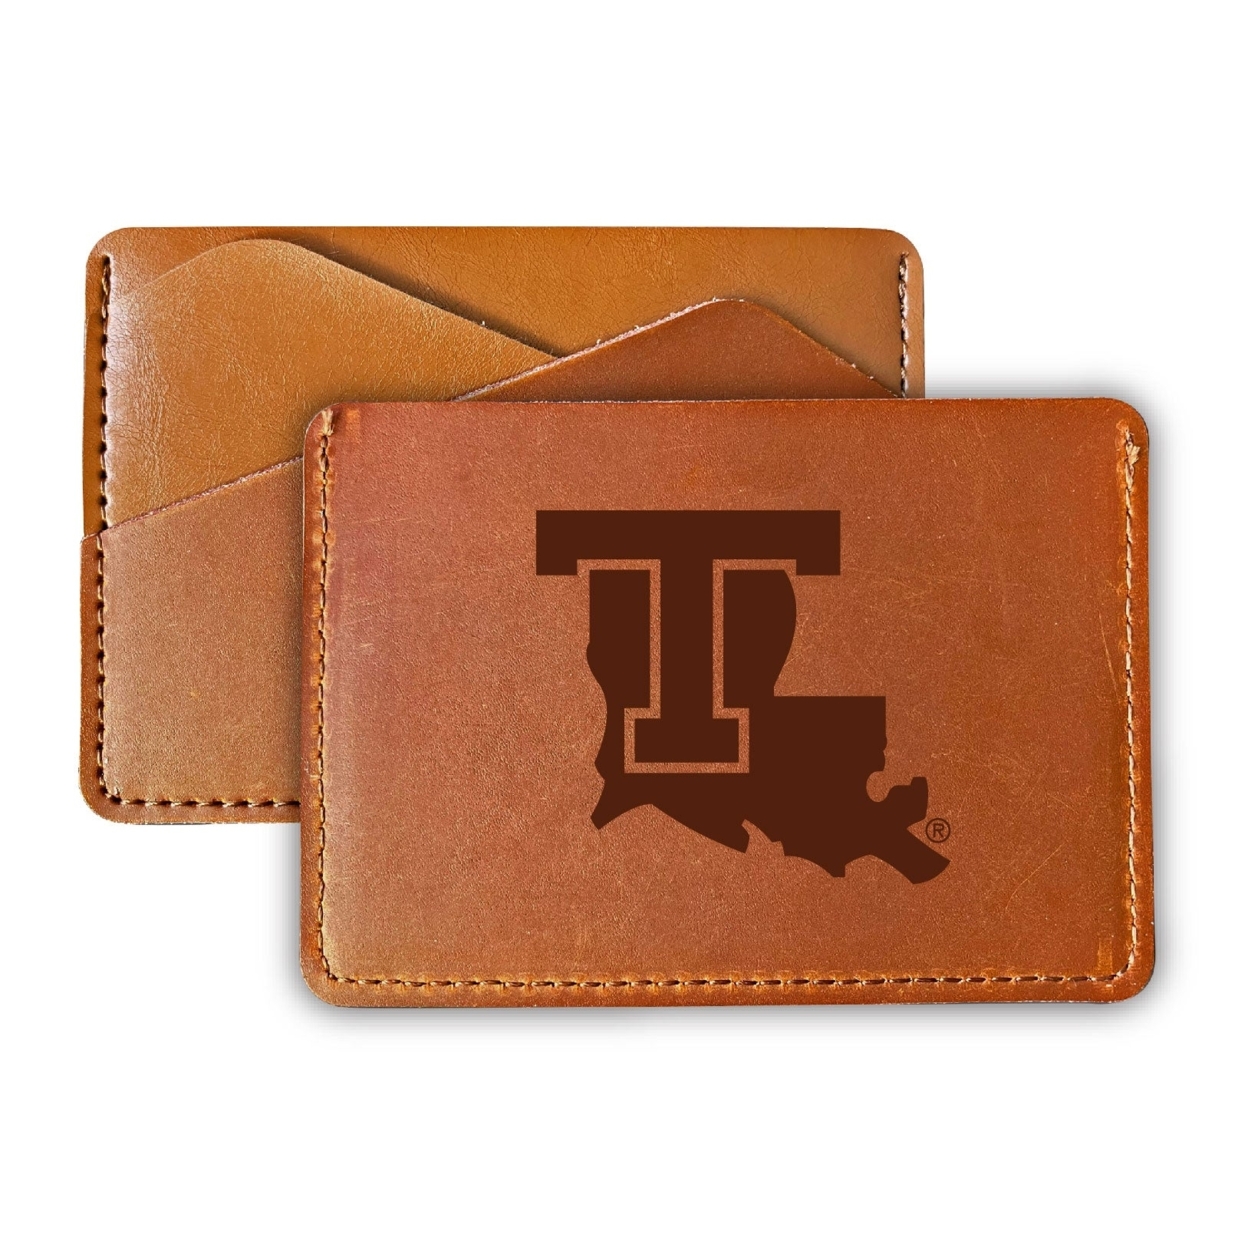 Louisiana Tech Bulldogs College Leather Card Holder Wallet